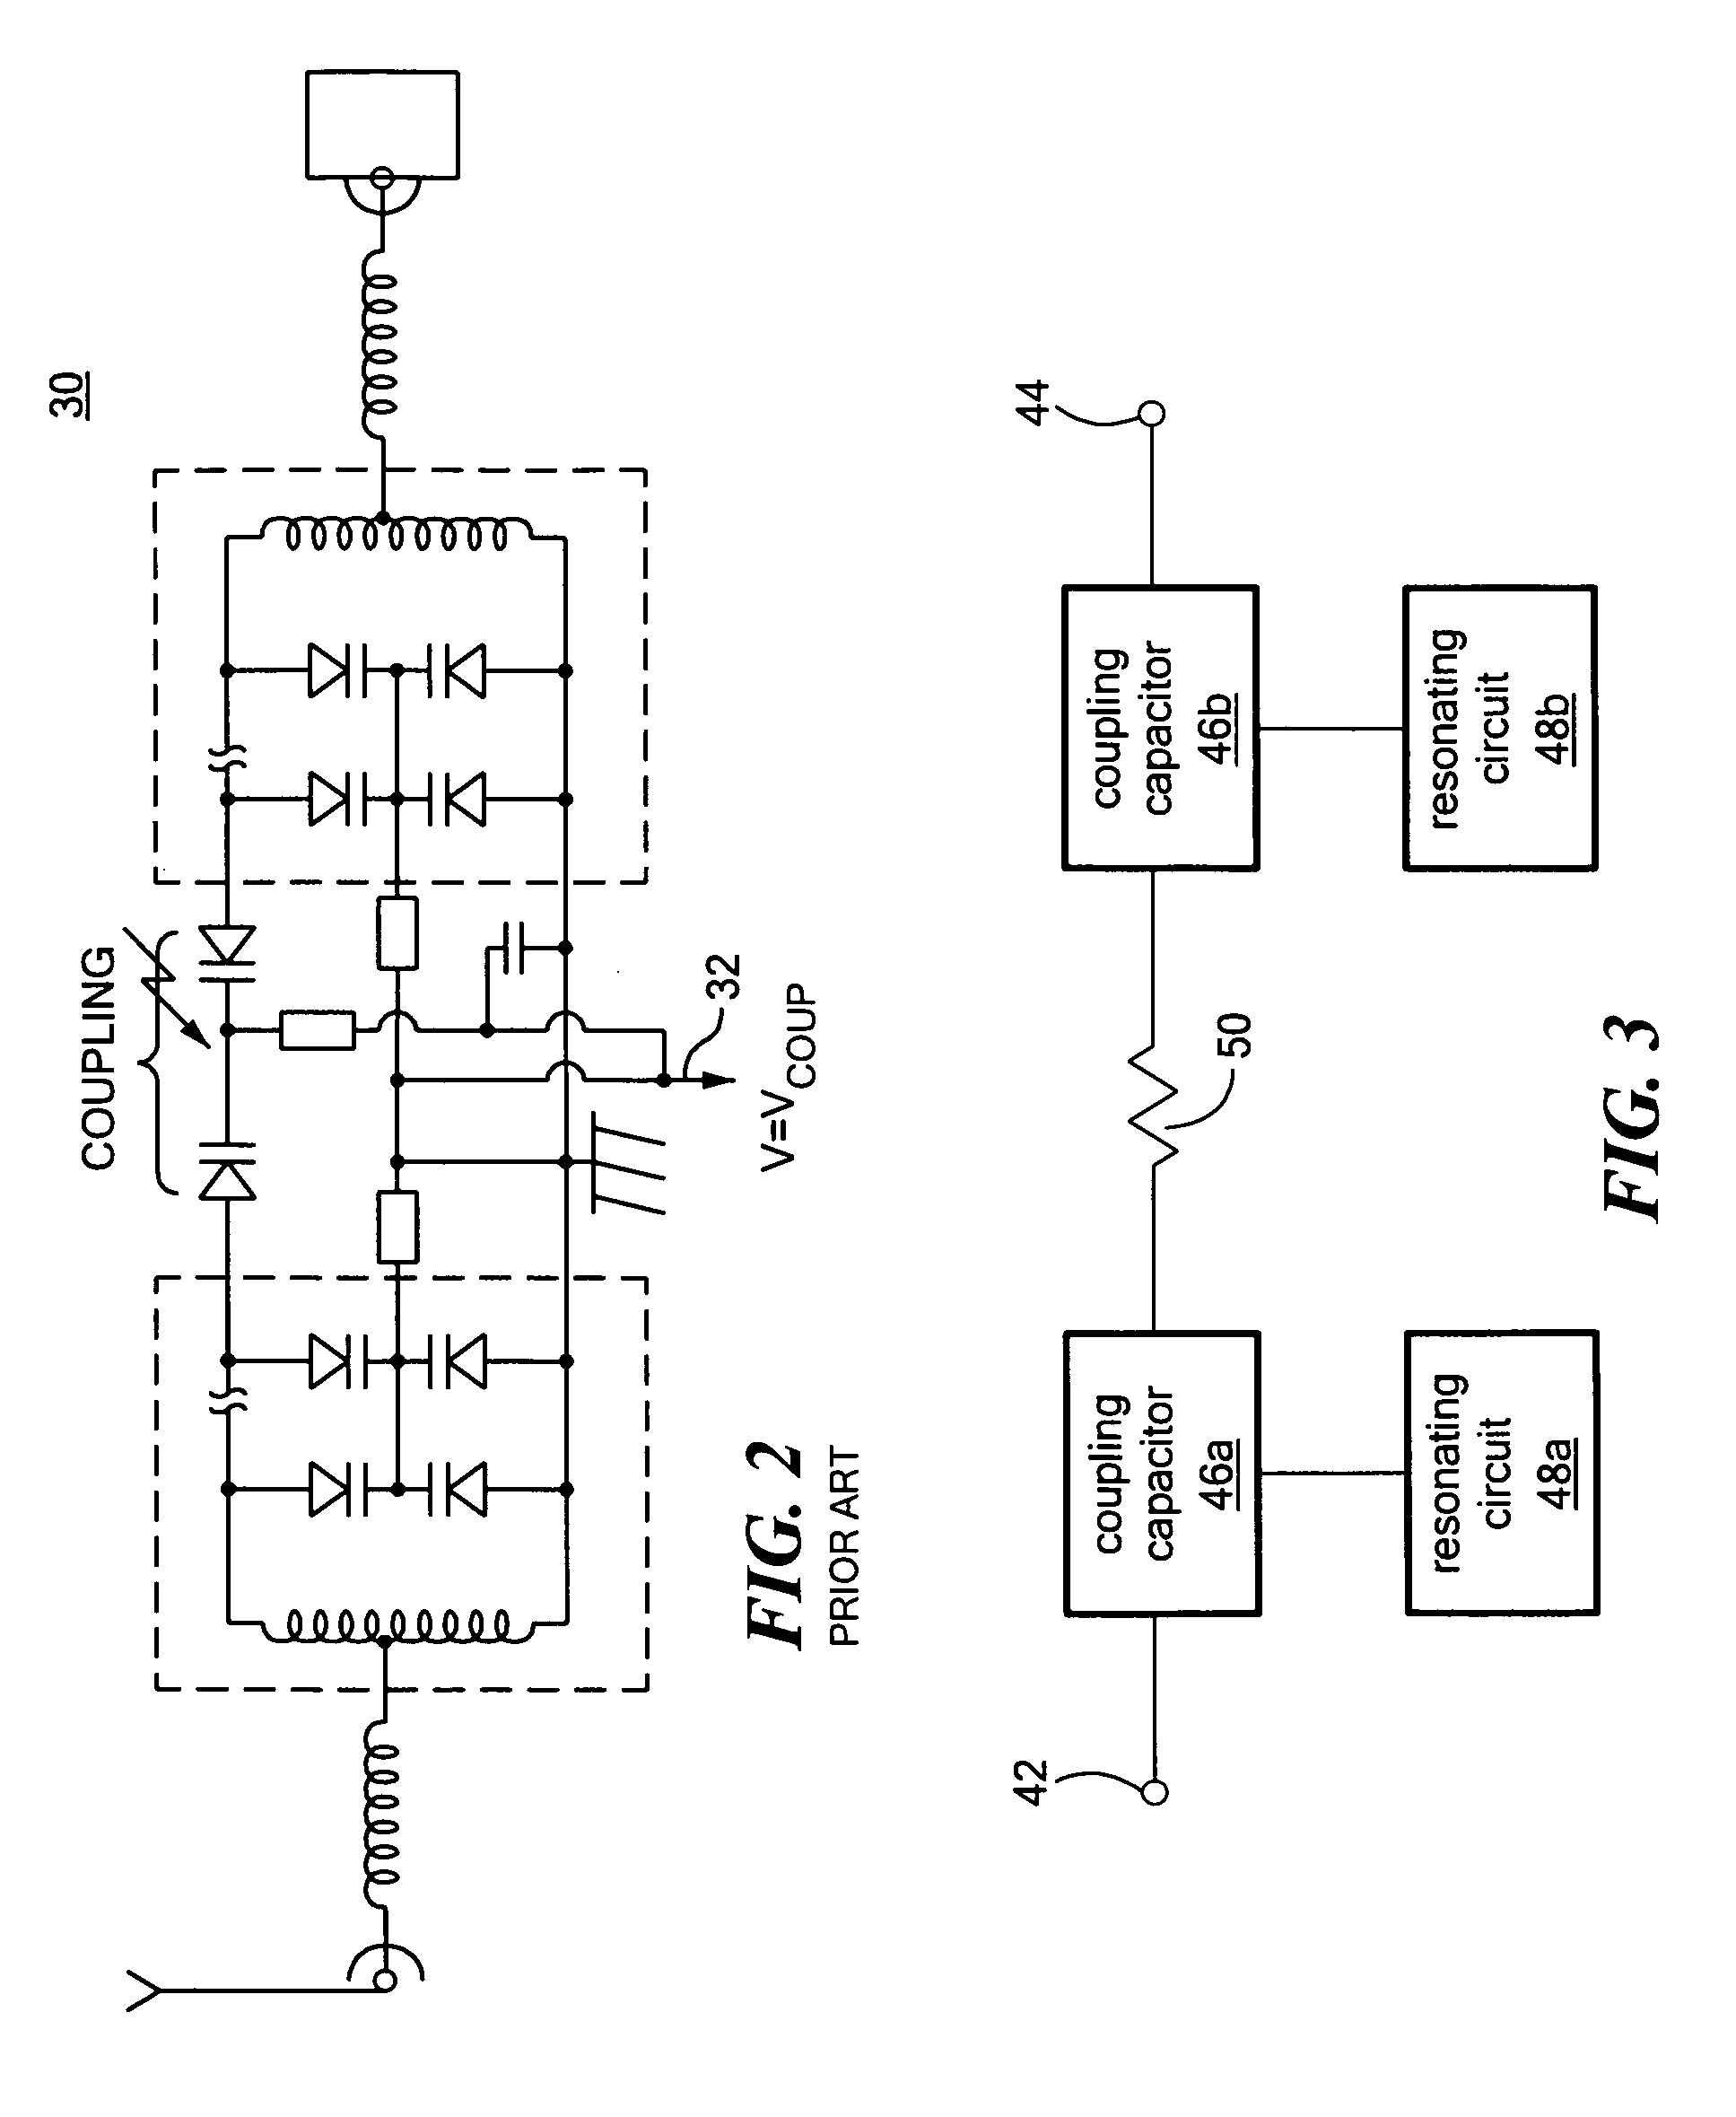 Wideband analog bandpass filter